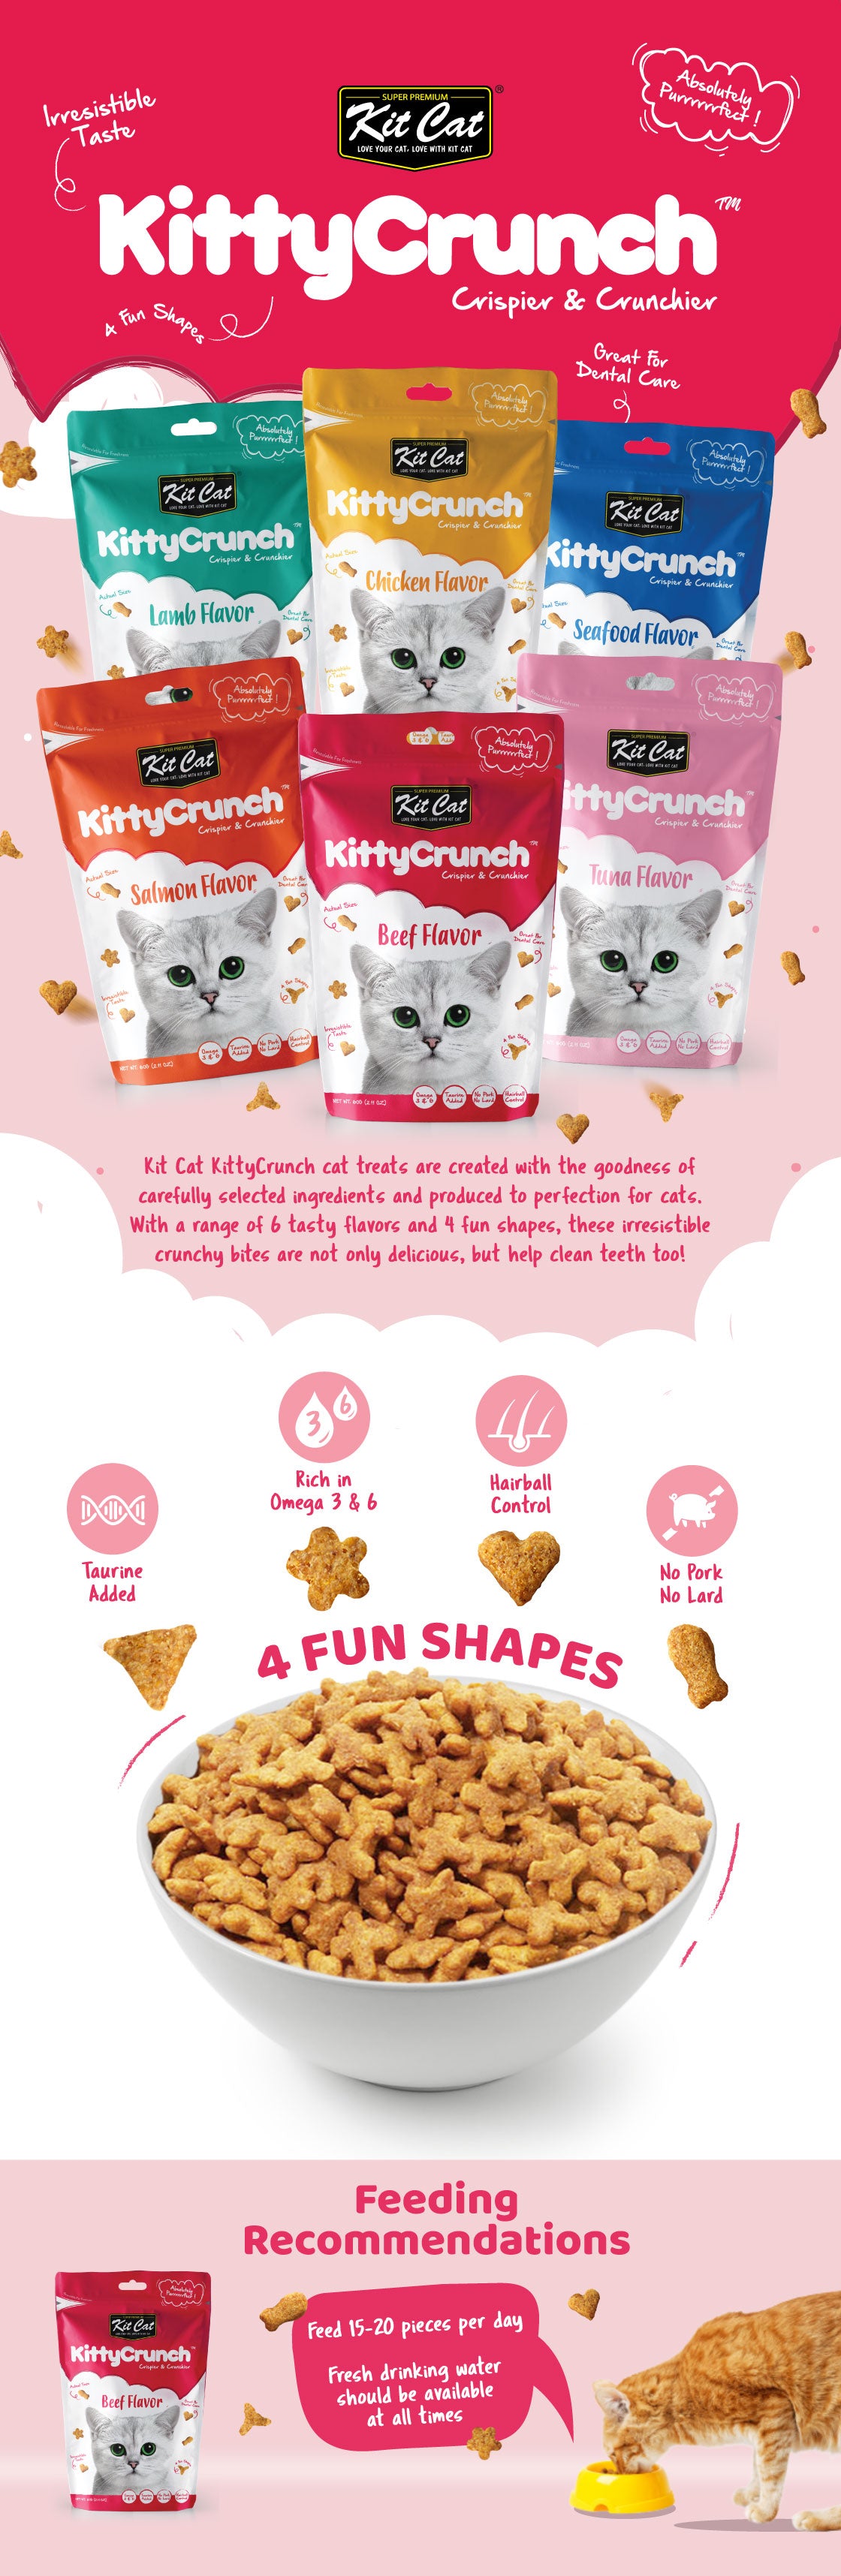 Kit Cat Kitty Crunch Cat Treats - Tuna (60g)